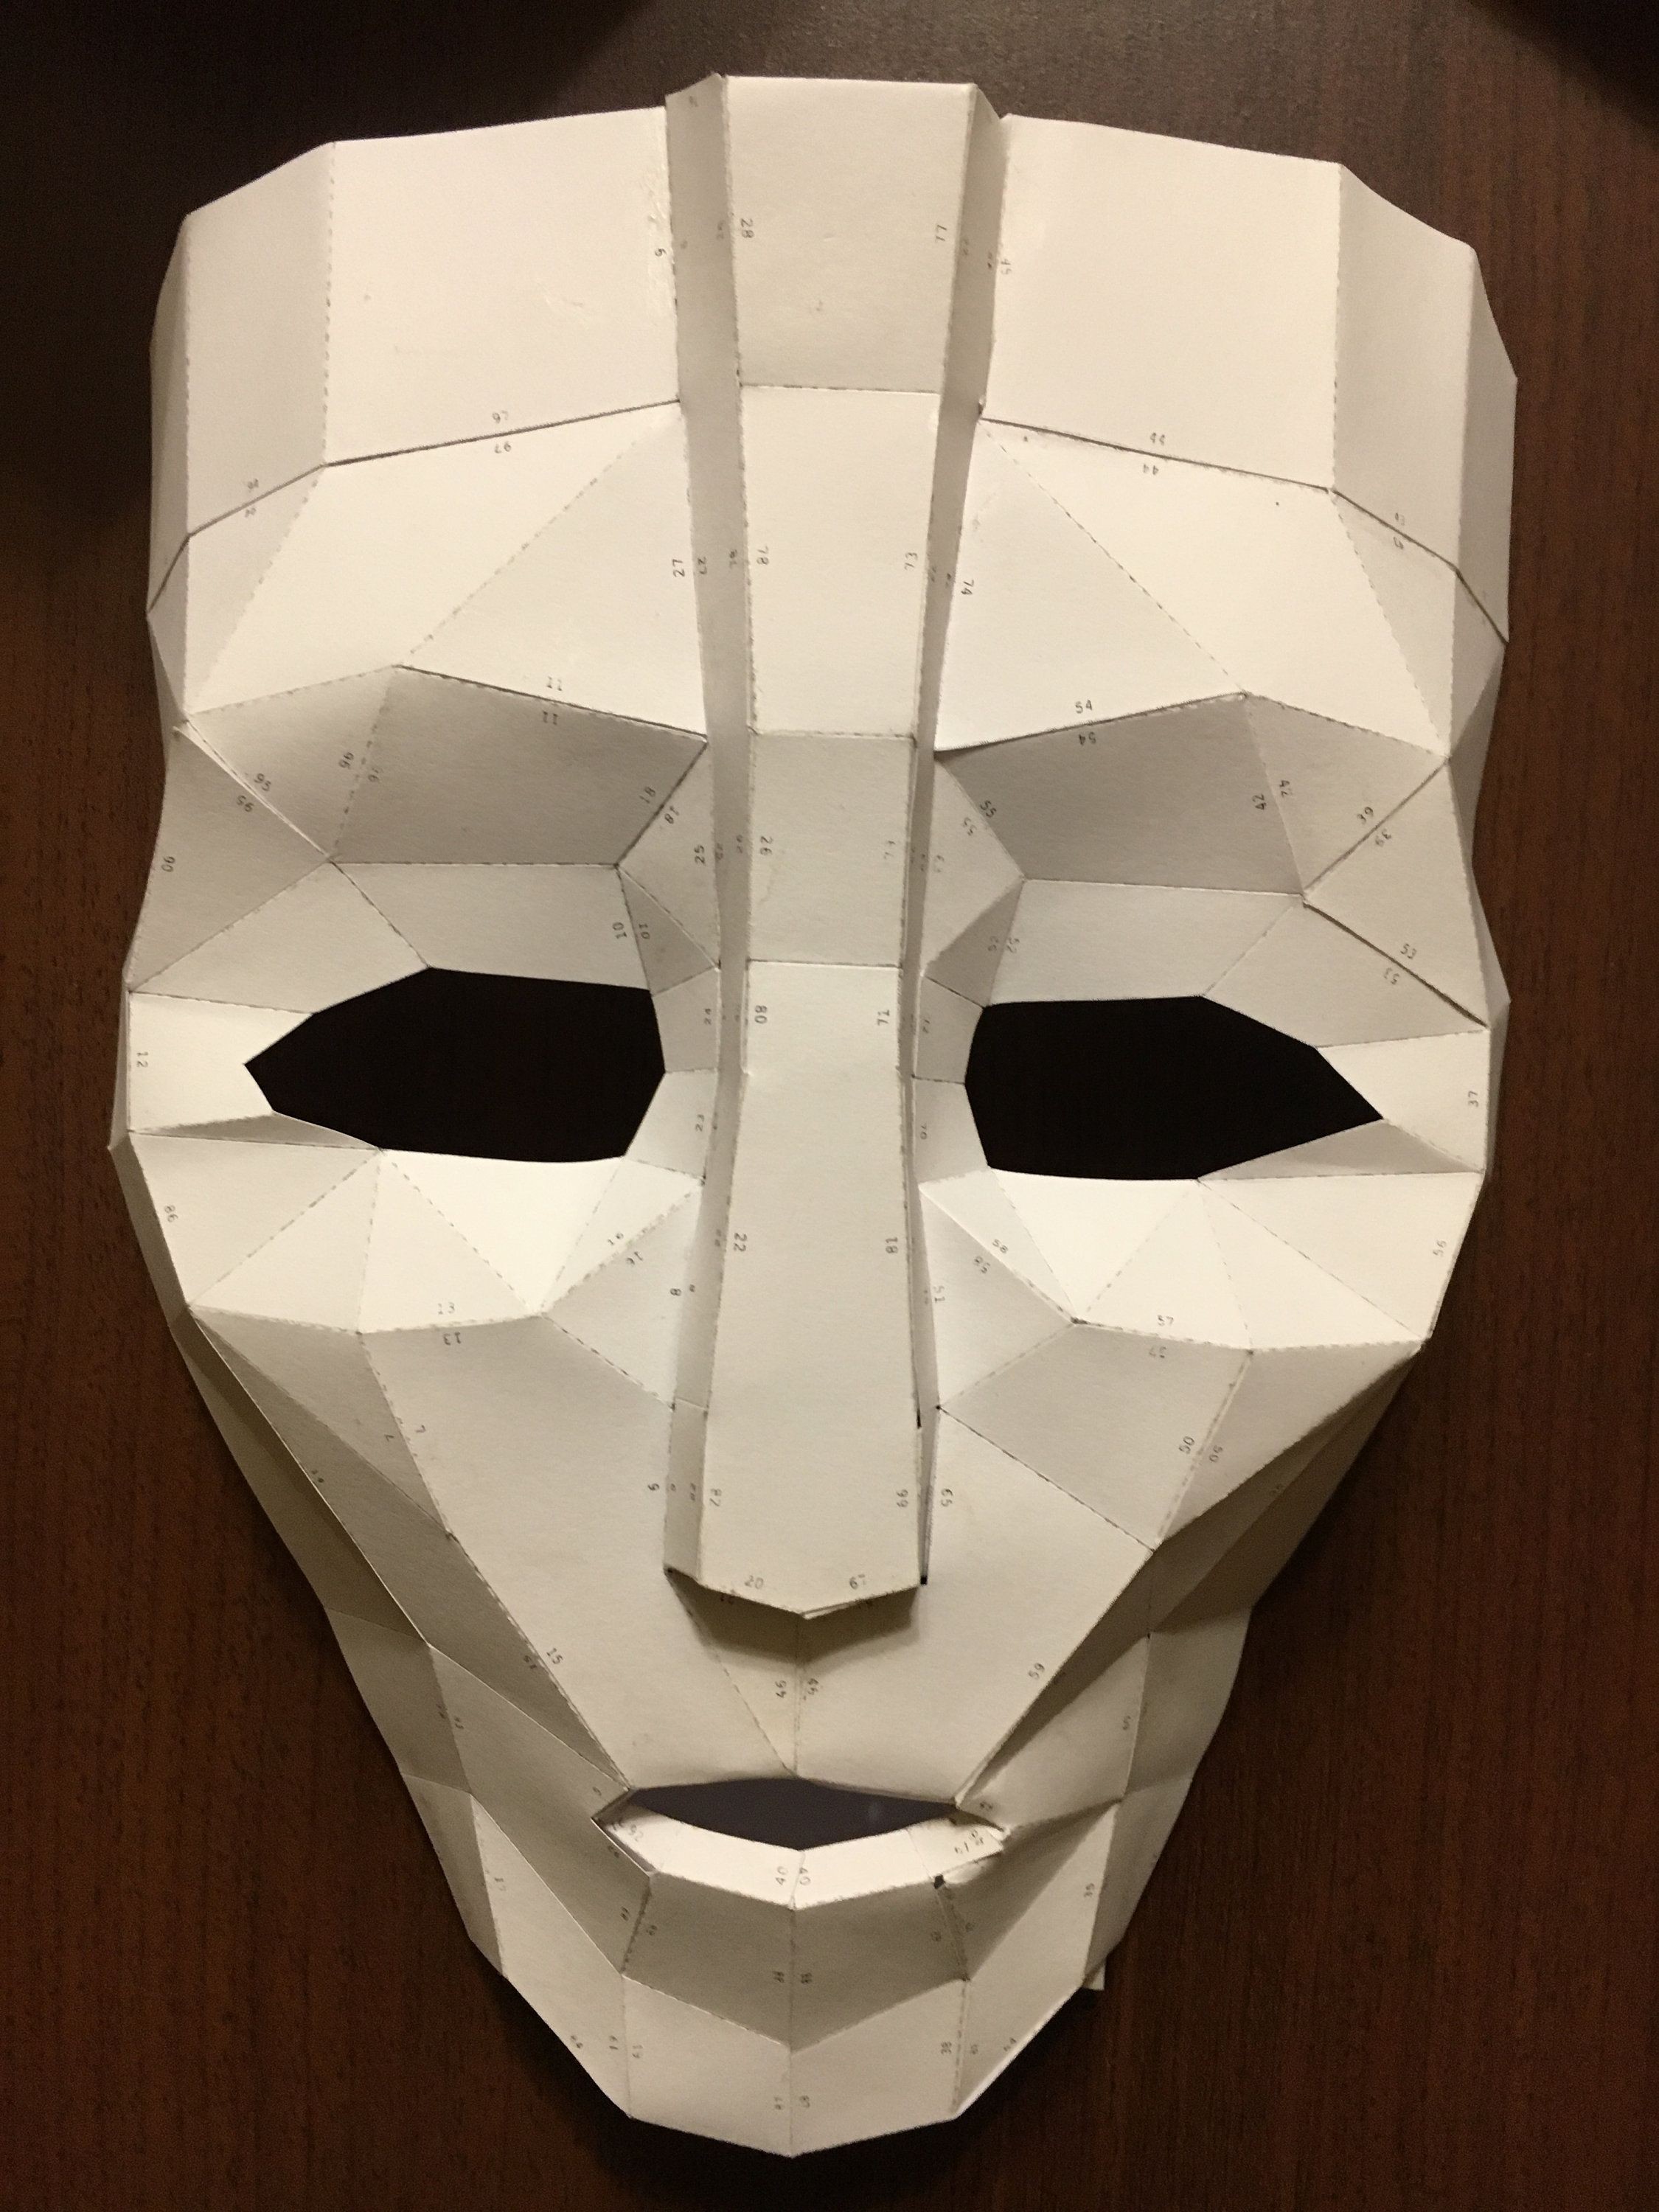 Hollow Mask Papercraft Loki Mask Diy Papercraft Model ÐÑÐ¼Ð°Ð¶Ð½ÑÐµ Ð¸Ð·Ð´ÐµÐ Ð¸Ñ